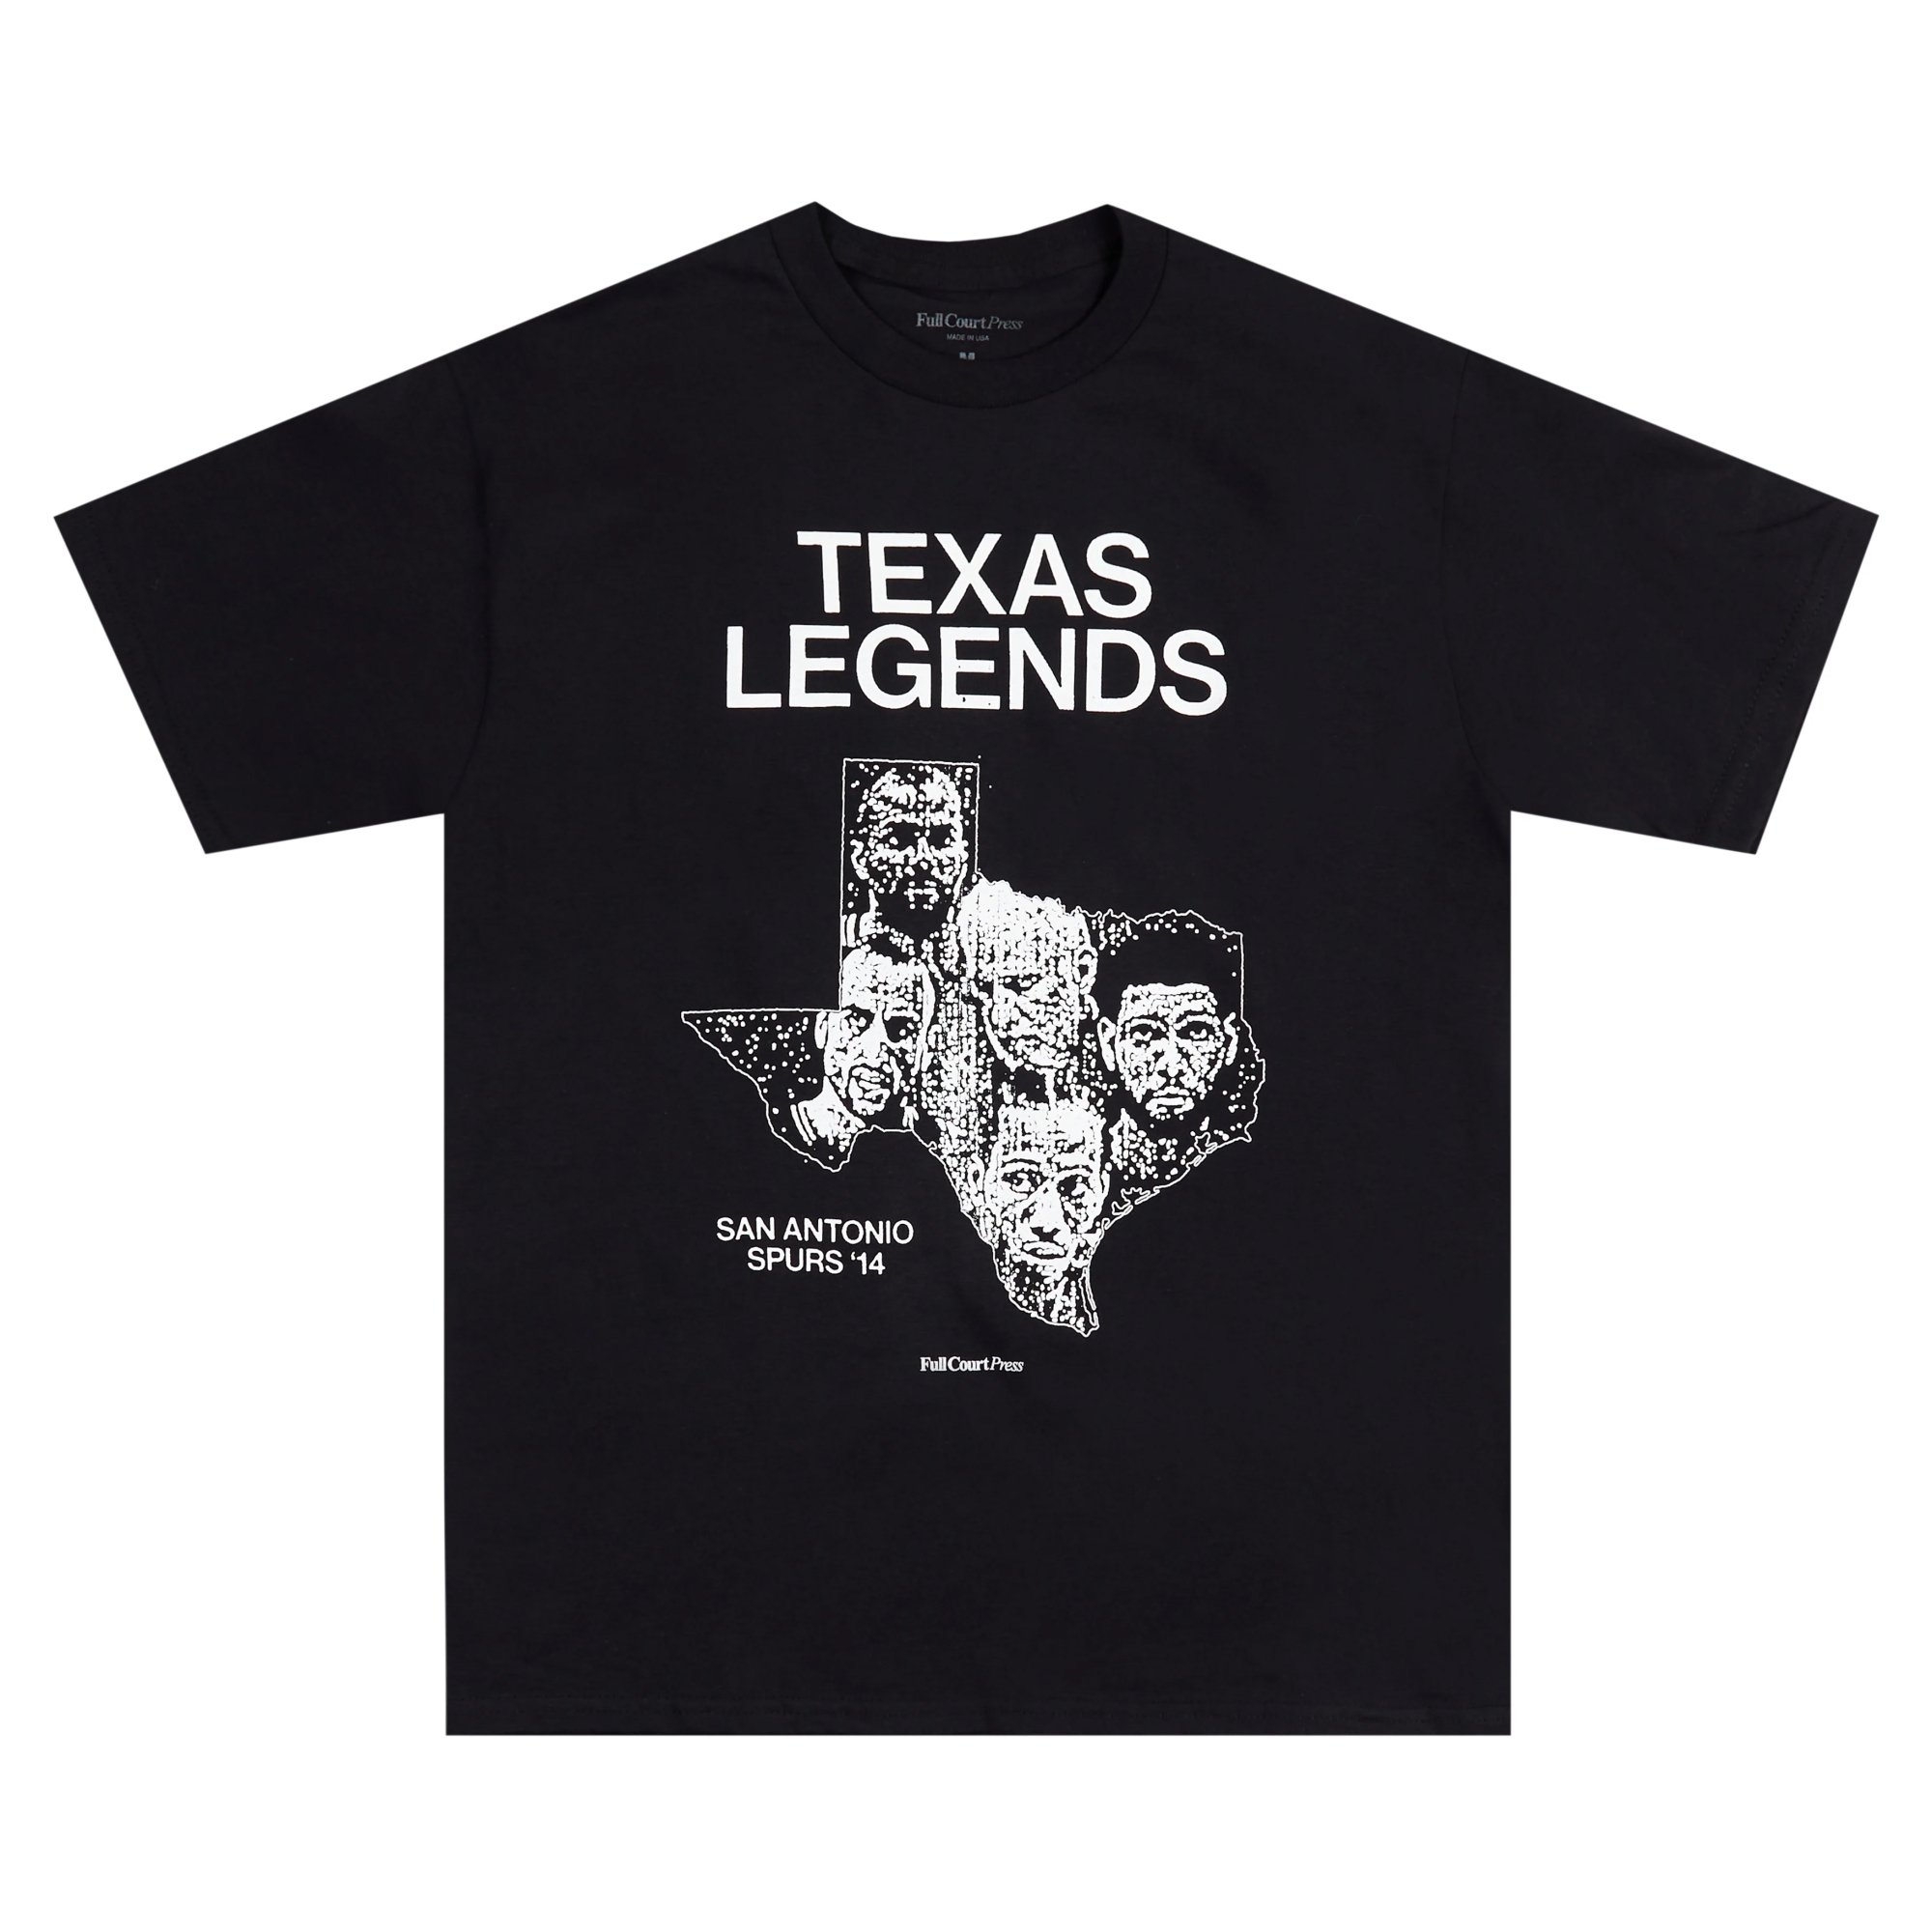 Full Court Press<br>Texas Legends Tee<br>